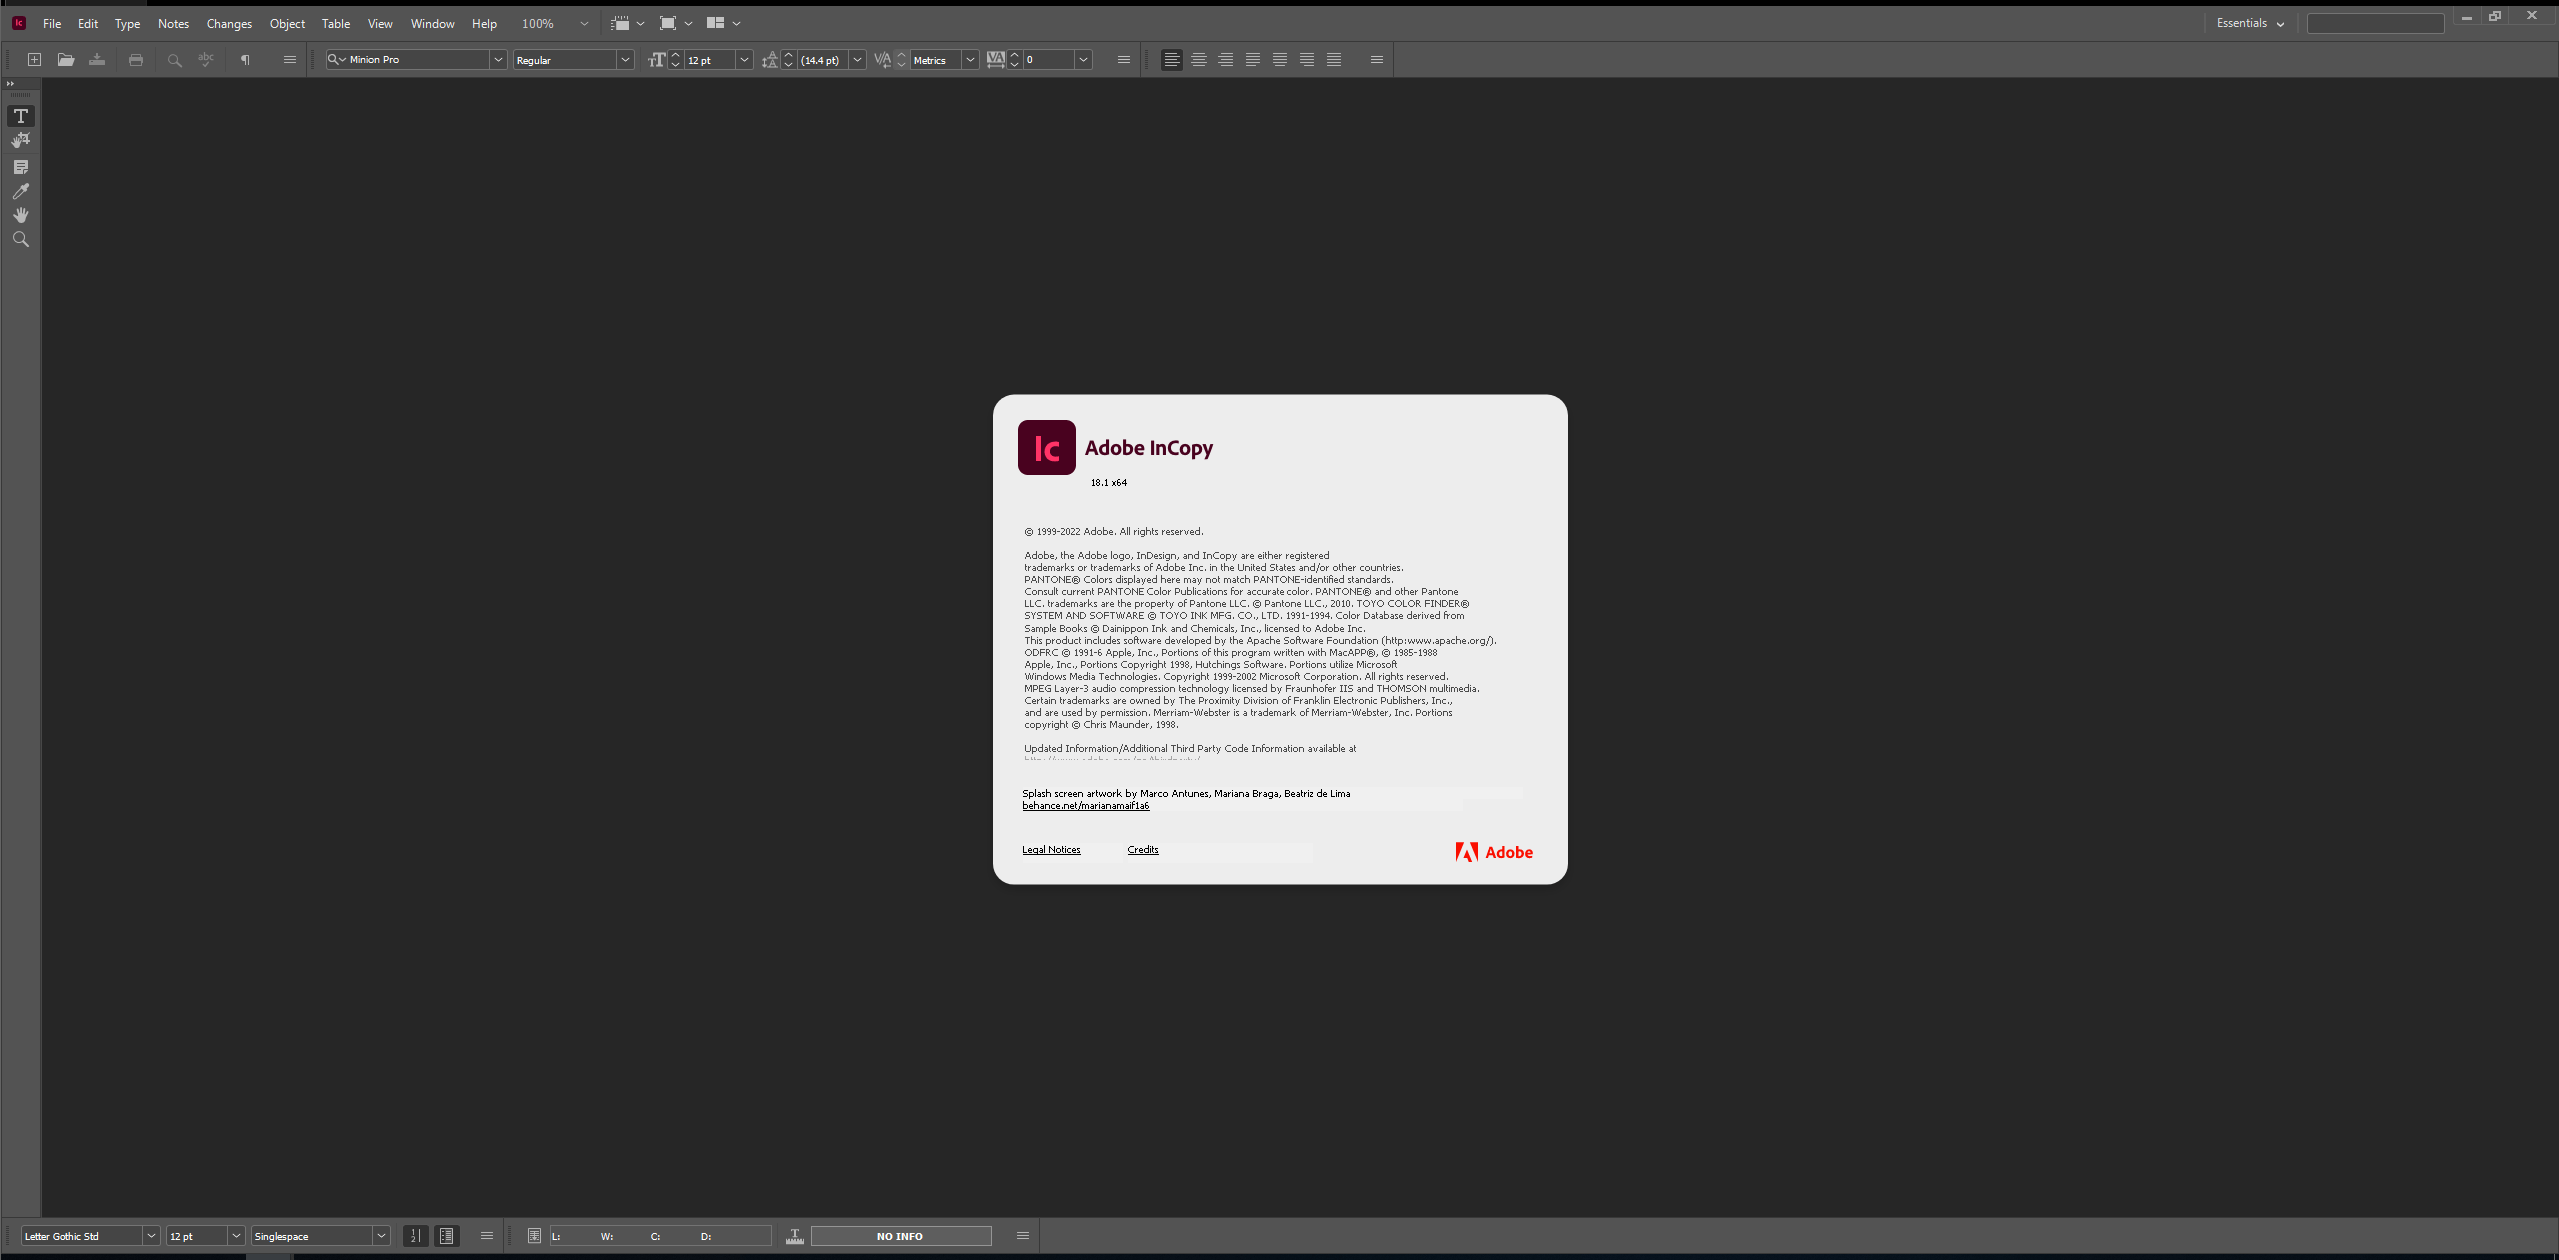 Adobe InCopy 2023 v18.5.0.57 for windows instal free